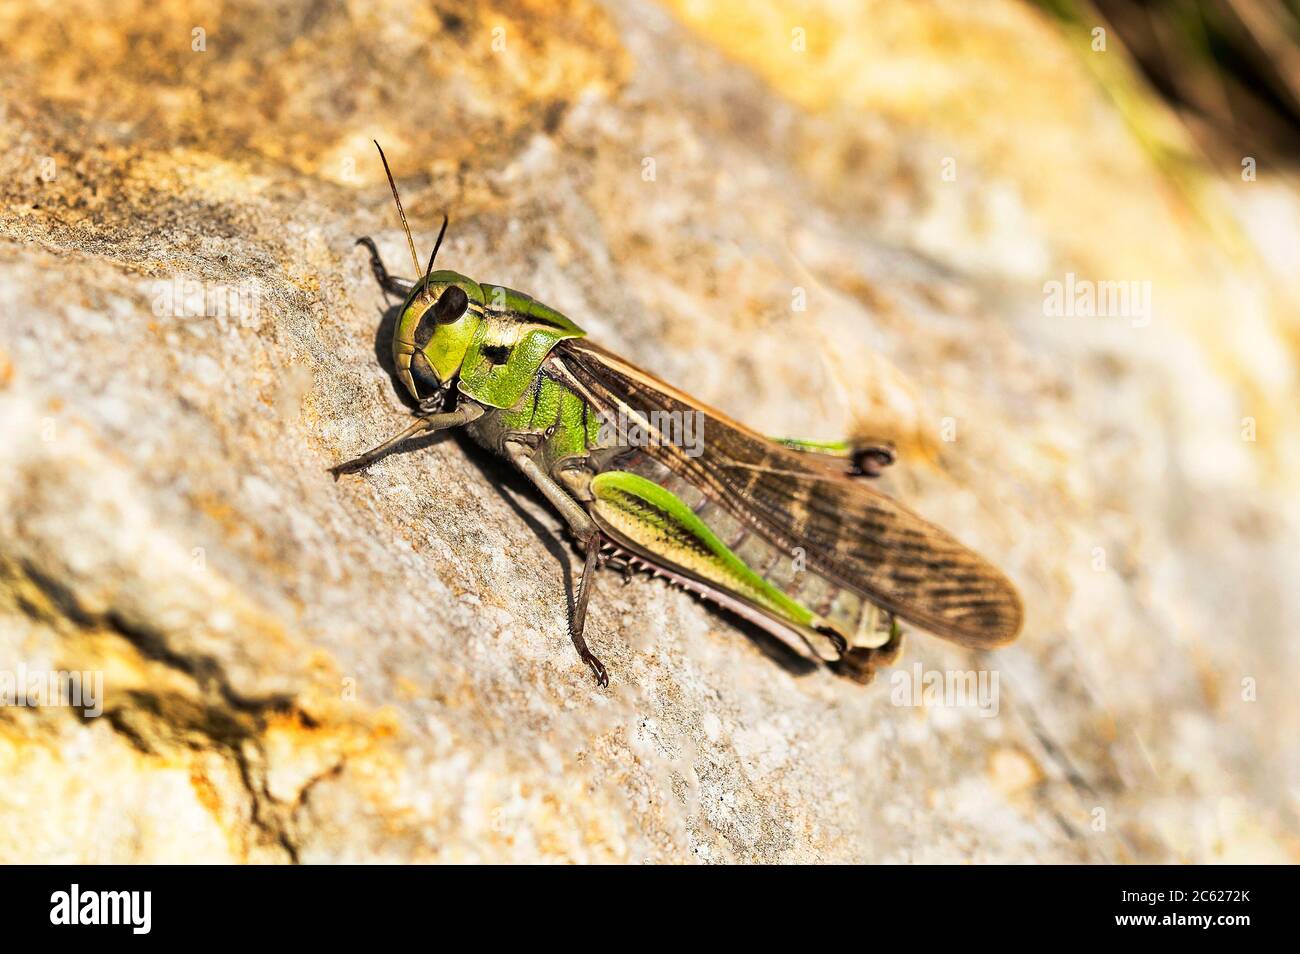 Caelifera. Orthopteran insects. Insecta. Sesaredas. Aldeia de S. Bartolomeu. Vila da Lourinhã. Portugal. Stock Photo